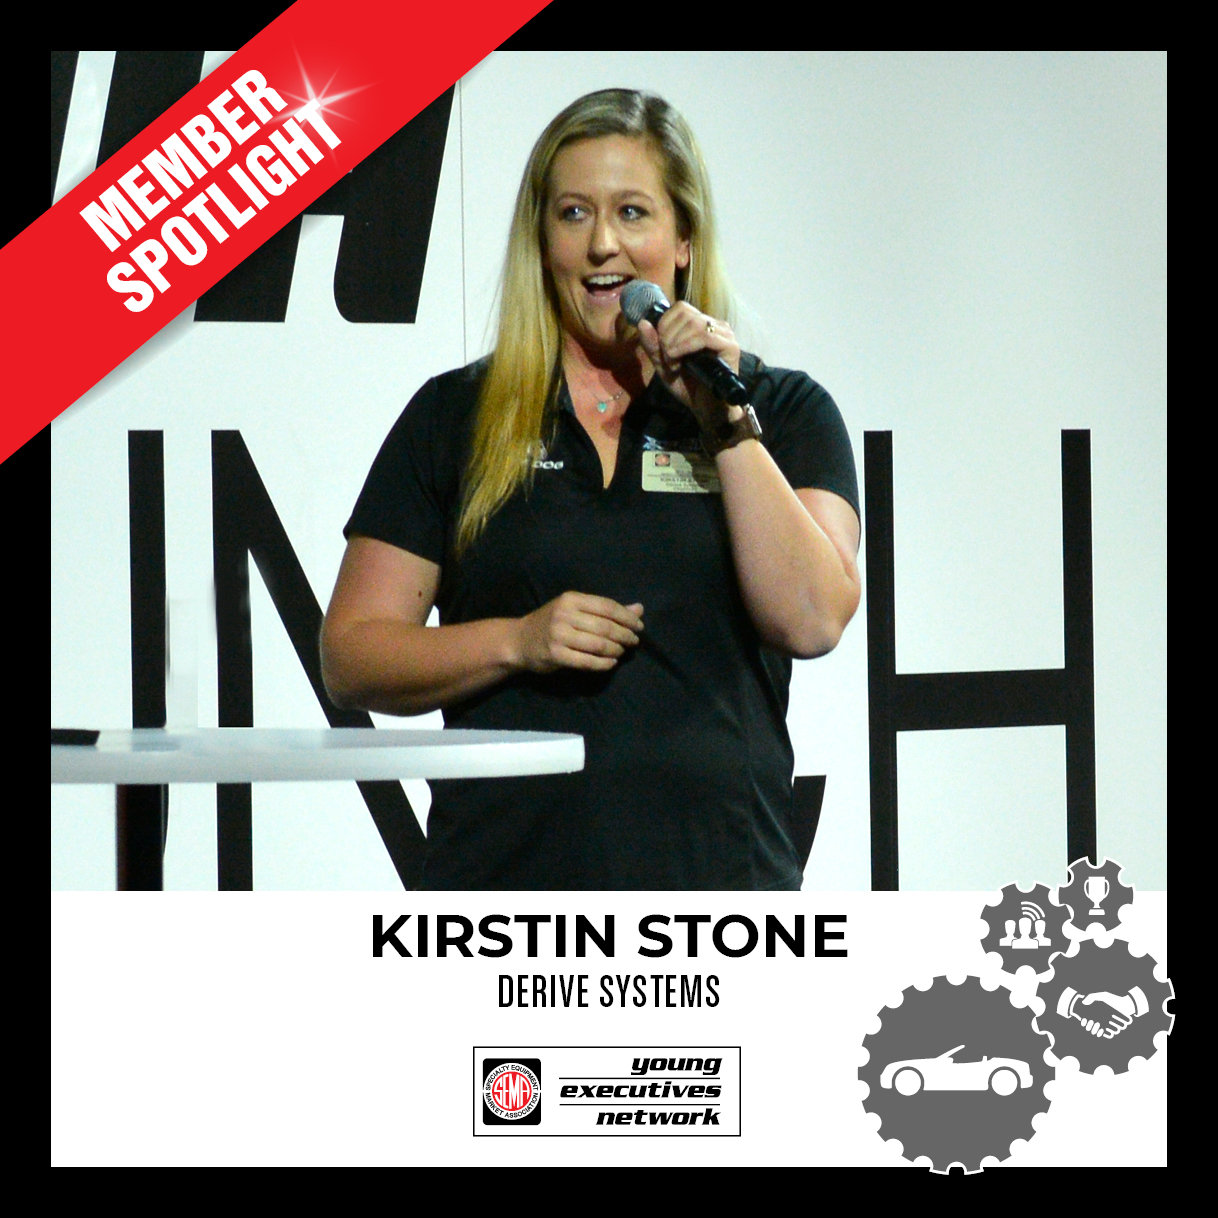 FLN Member Spotlight - Kirstin Stone